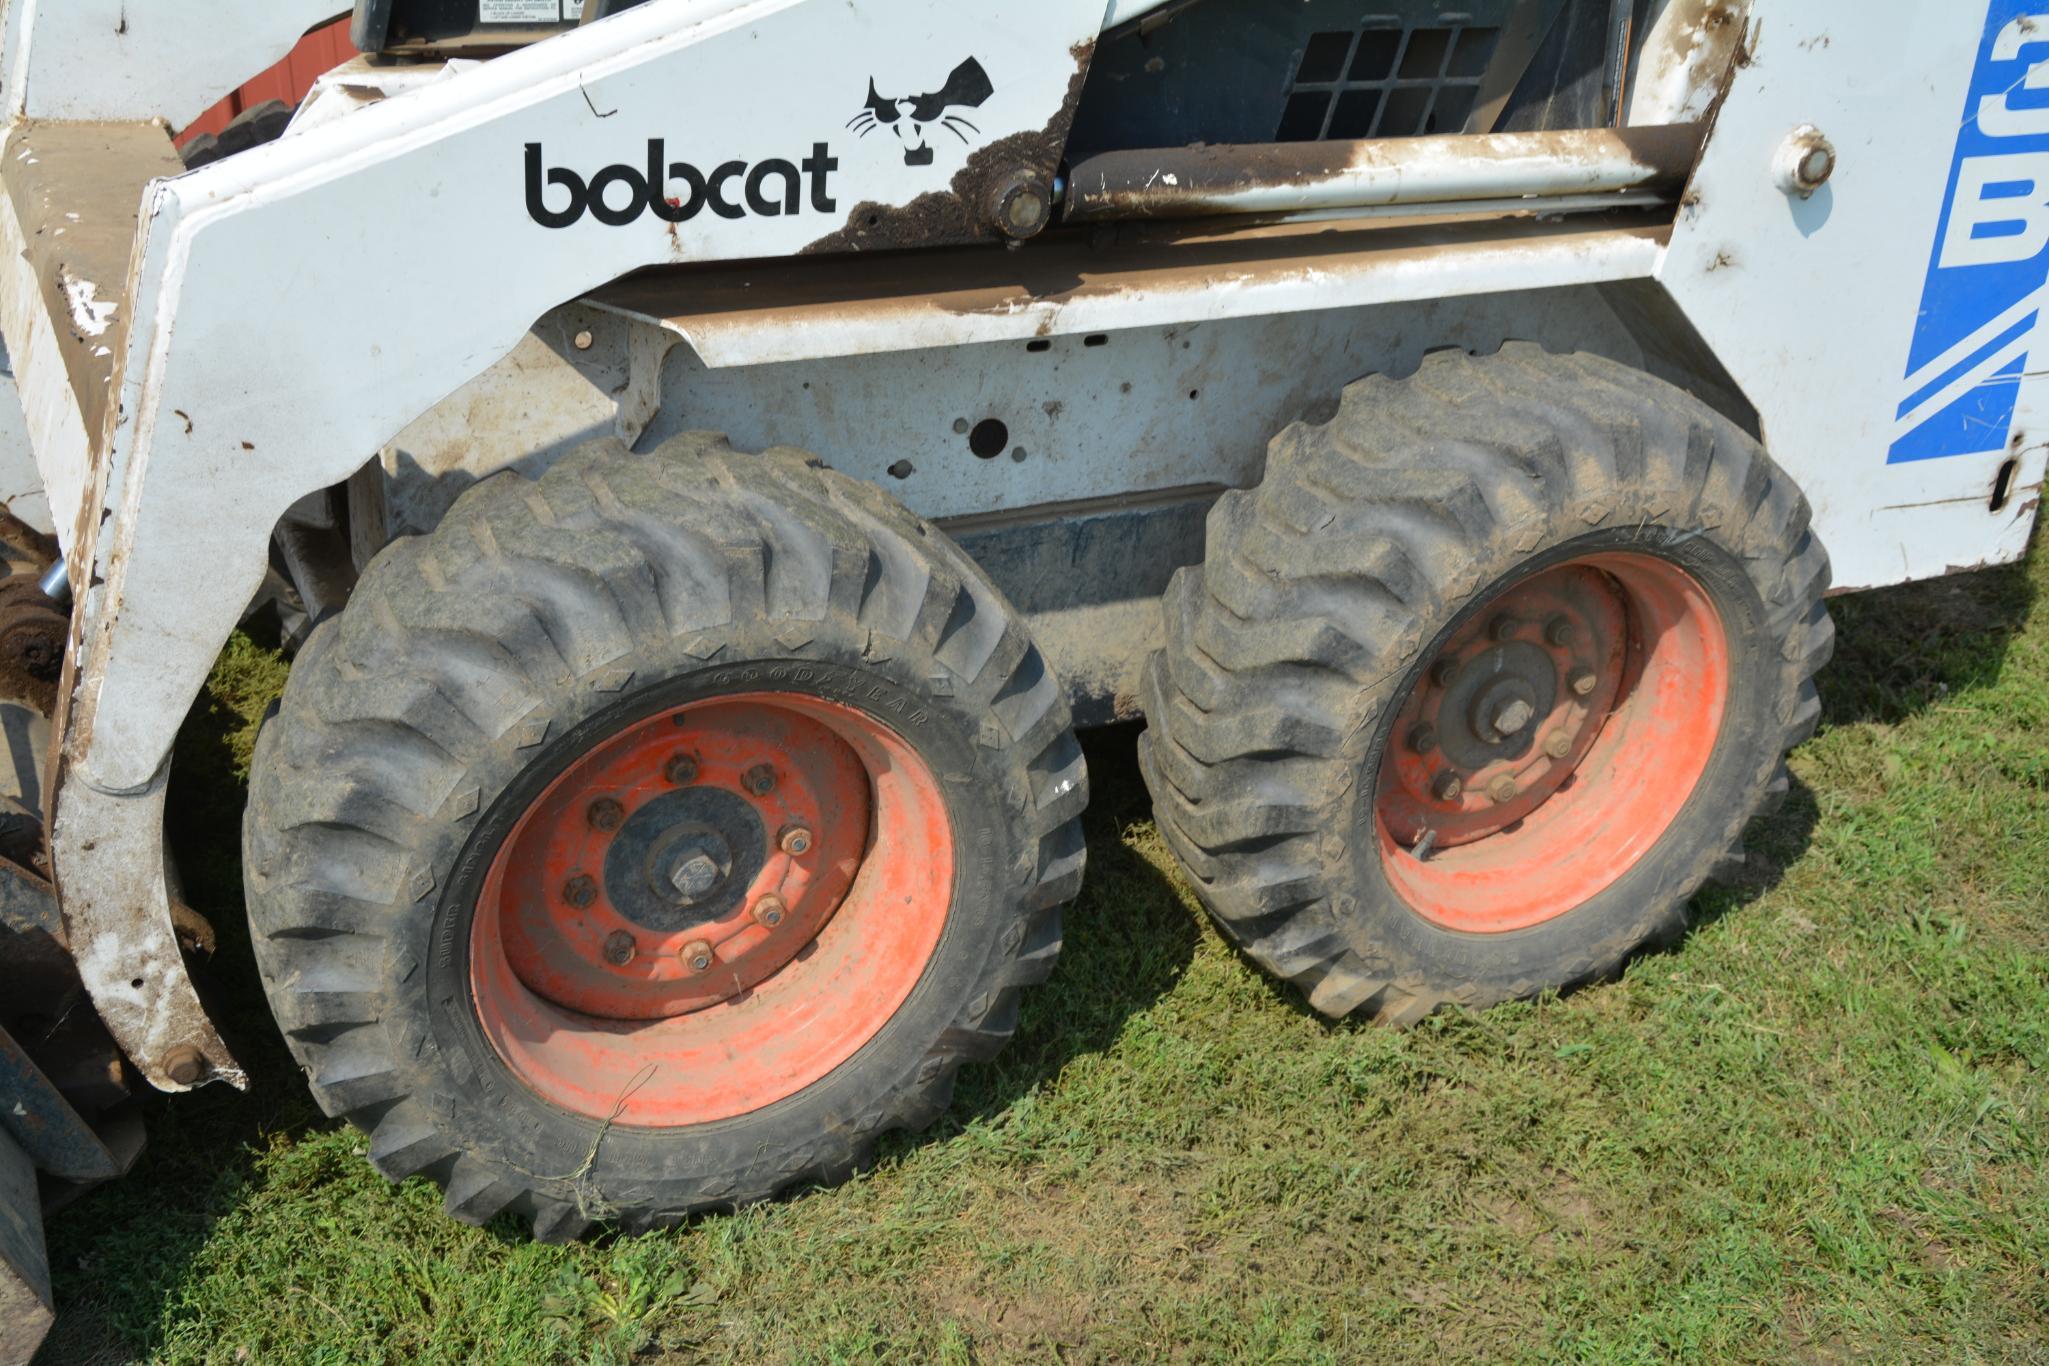 Bobcat 743B diesel skid loader